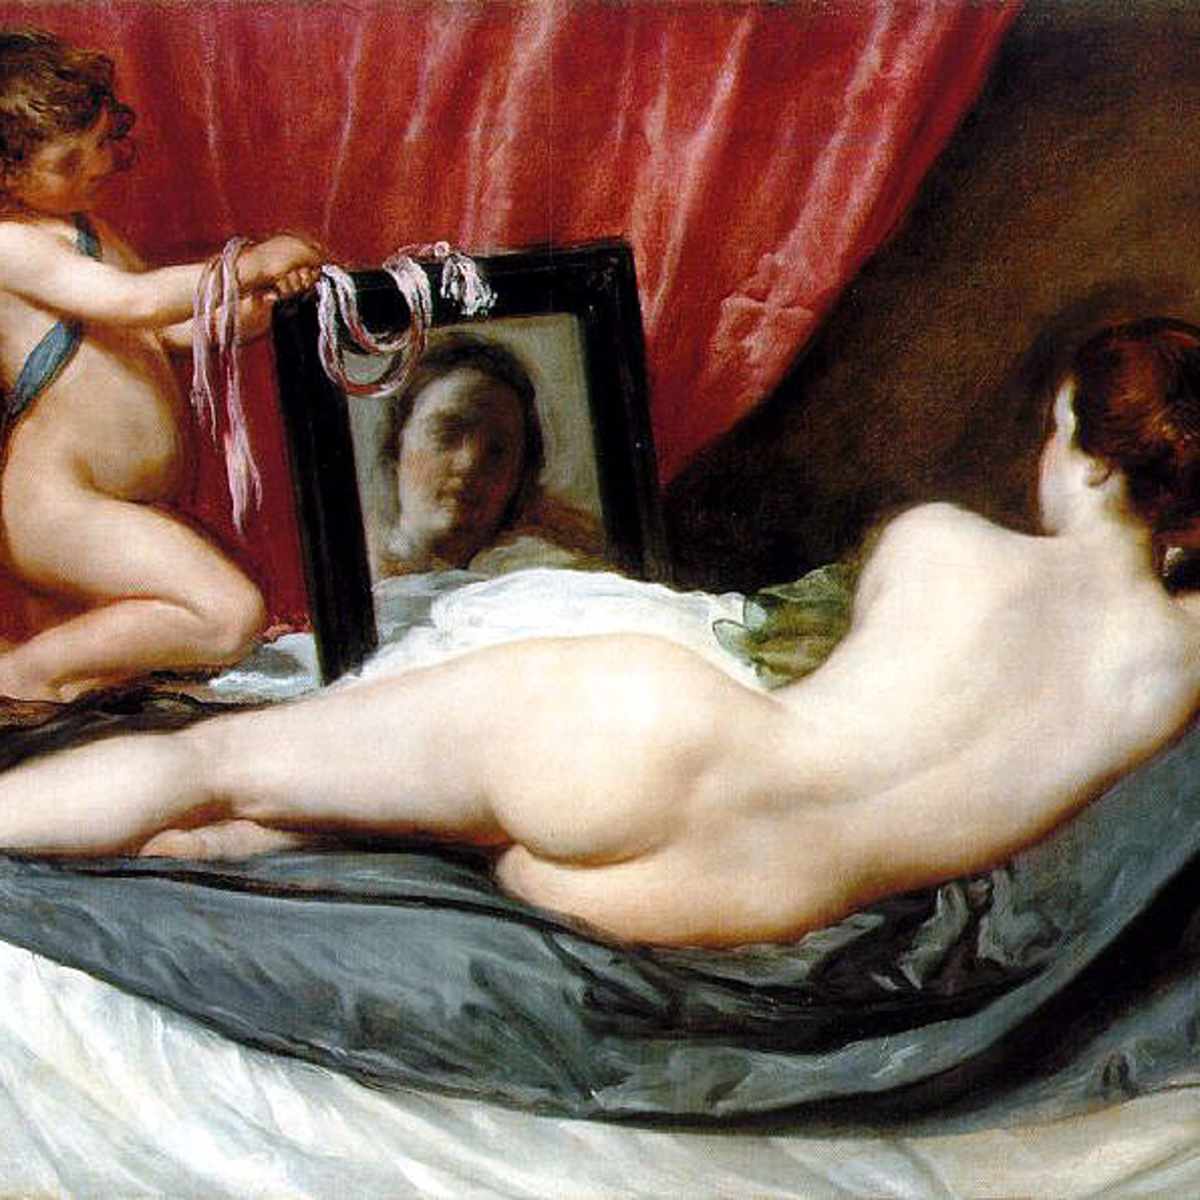 Art Pornography - Art or Pornography? 3 Variables That Influence Perception - FeltMagnet